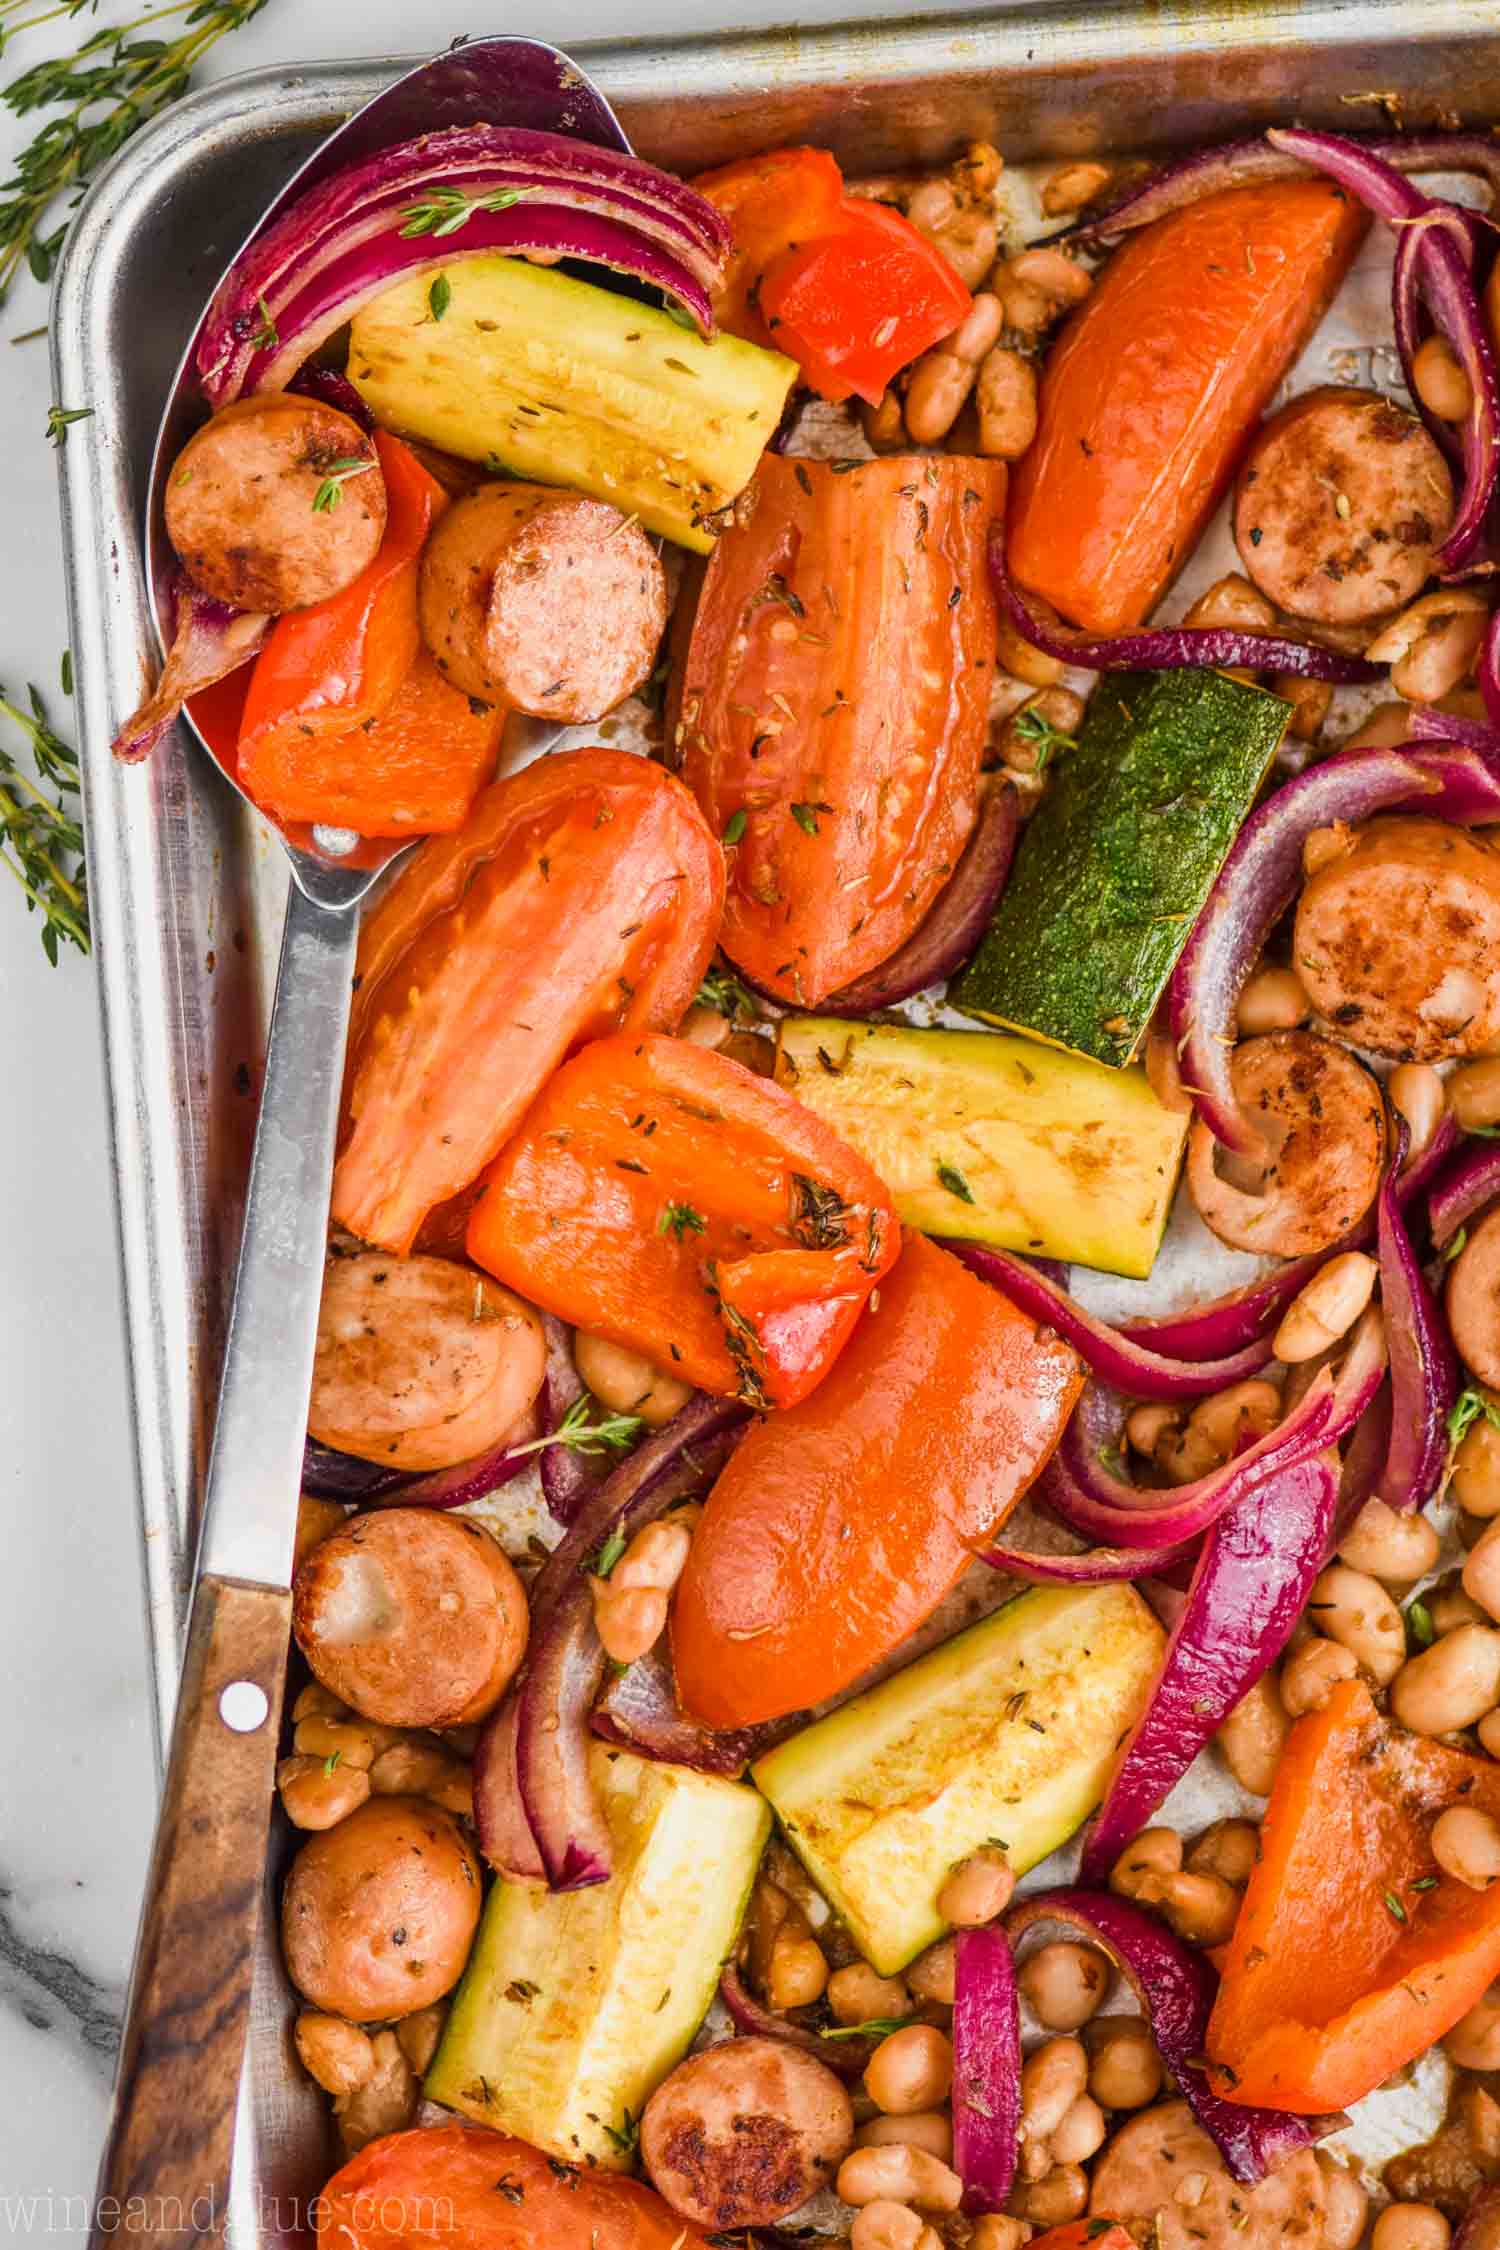 https://simplejoy.com/wp-content/uploads/2019/10/roasted_vegetable_and_sausages.jpg